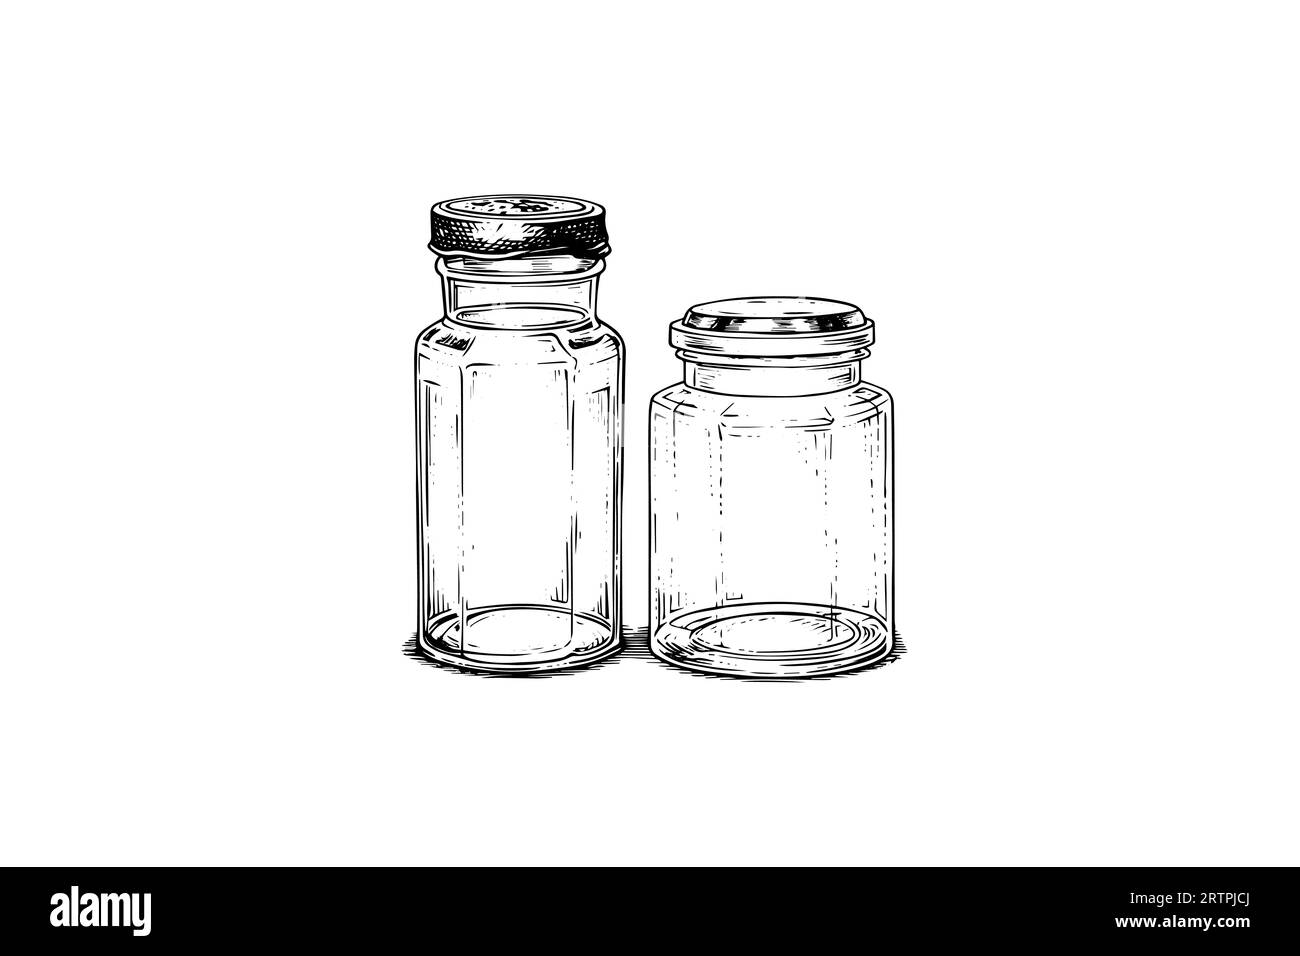 Empty glass jars ink sketch. Vector vintage black engraving illustration. Stock Vector